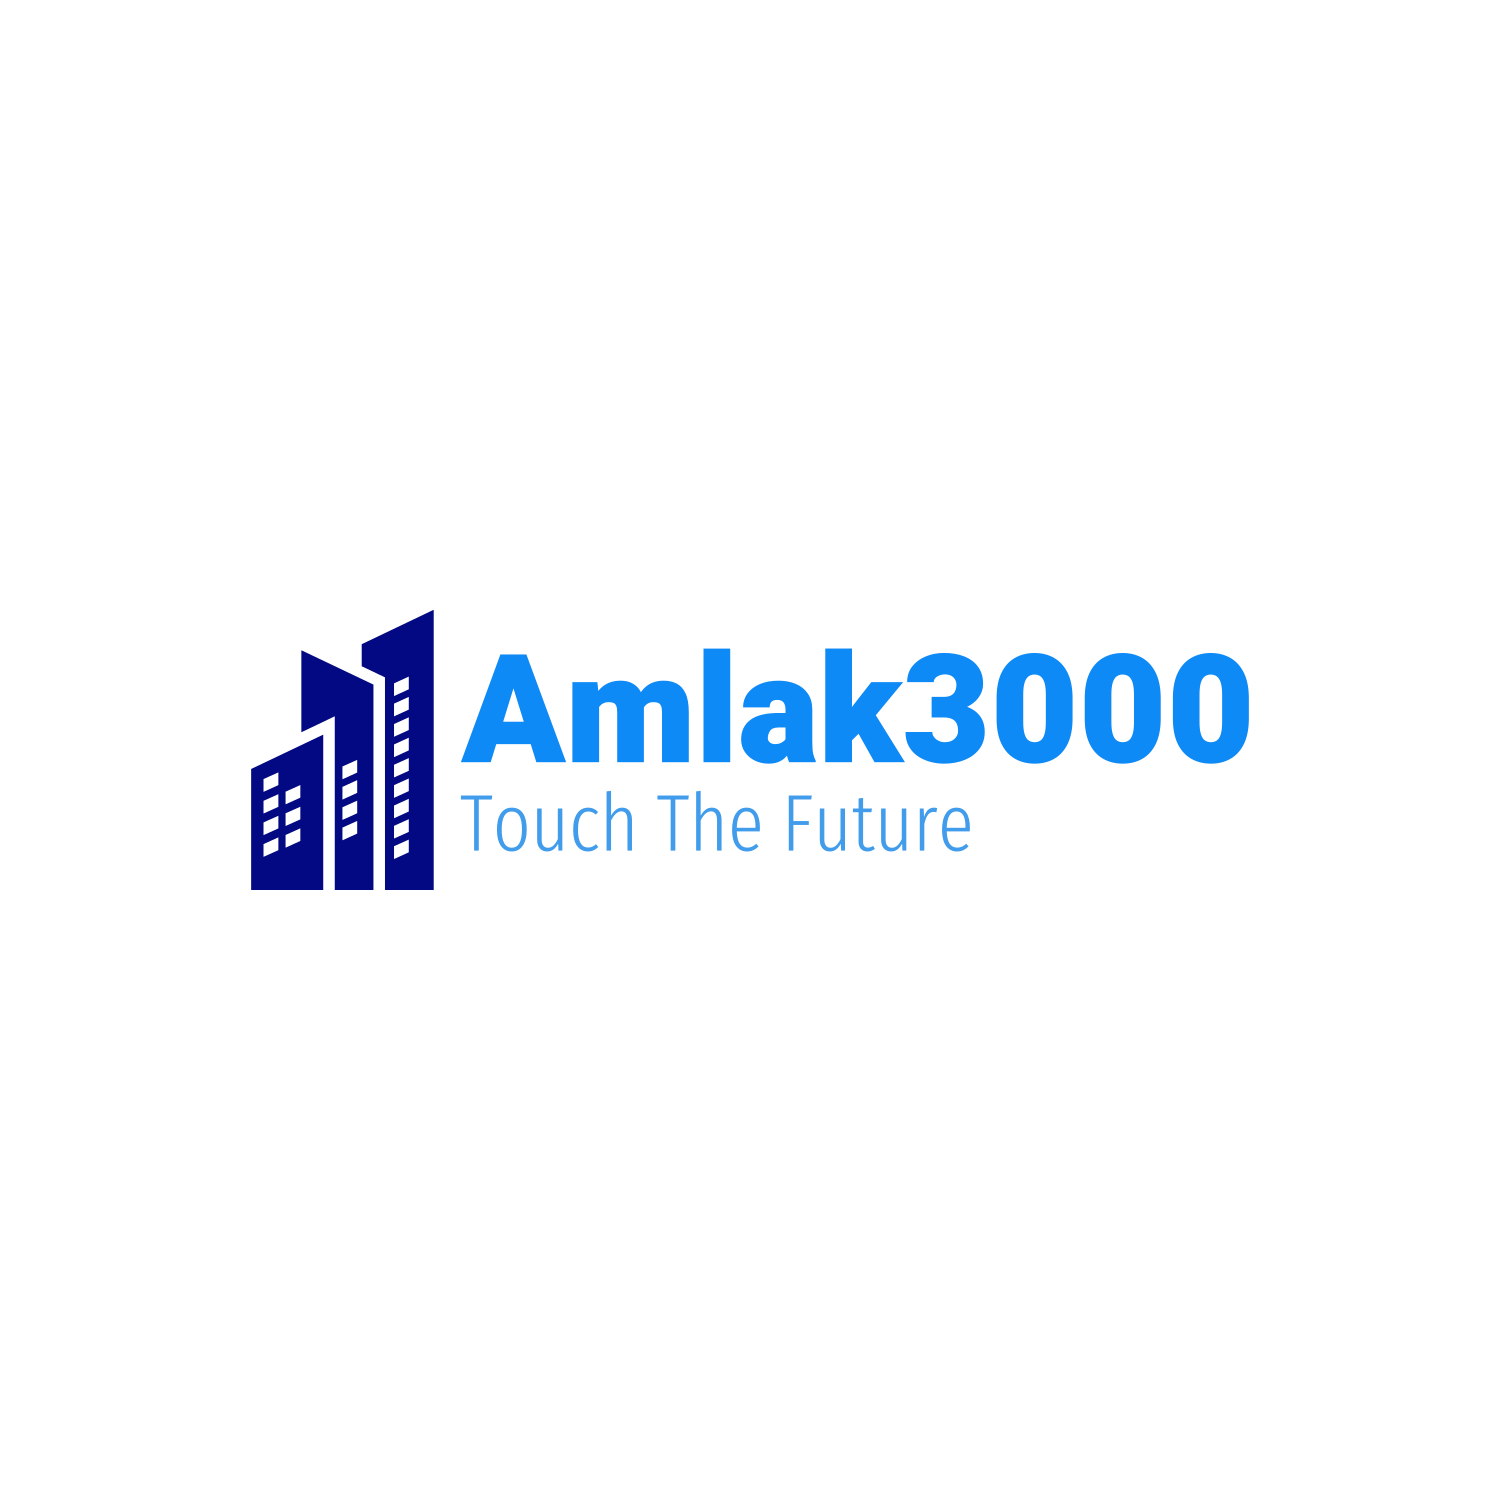 Amlak3000